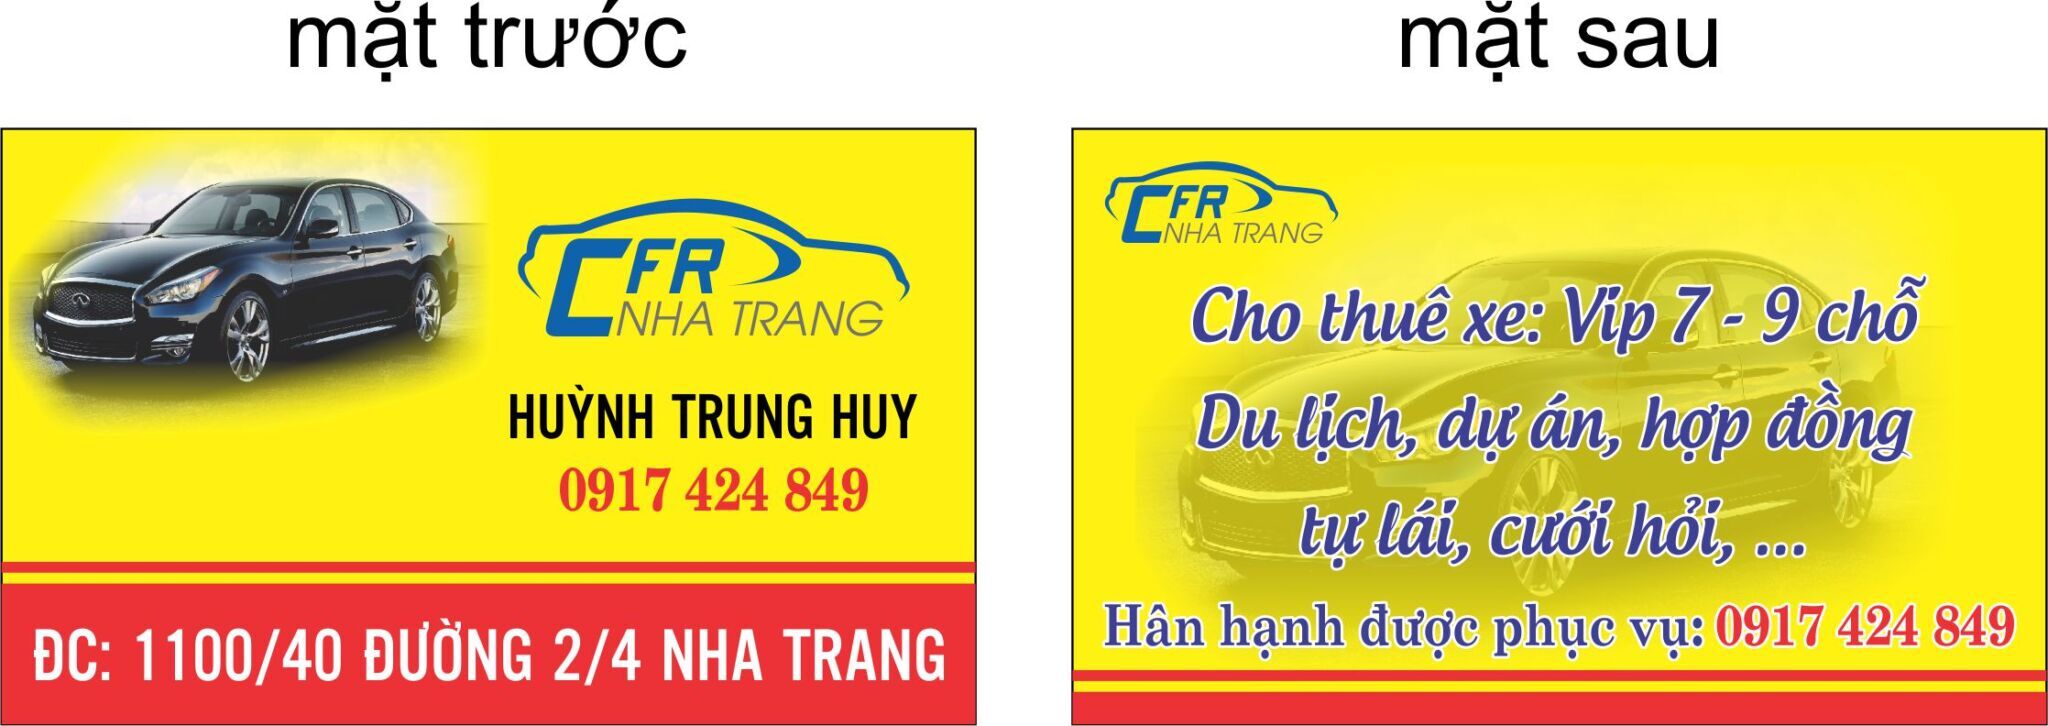 nhung-dieu-can-biet-ve-card-taxi